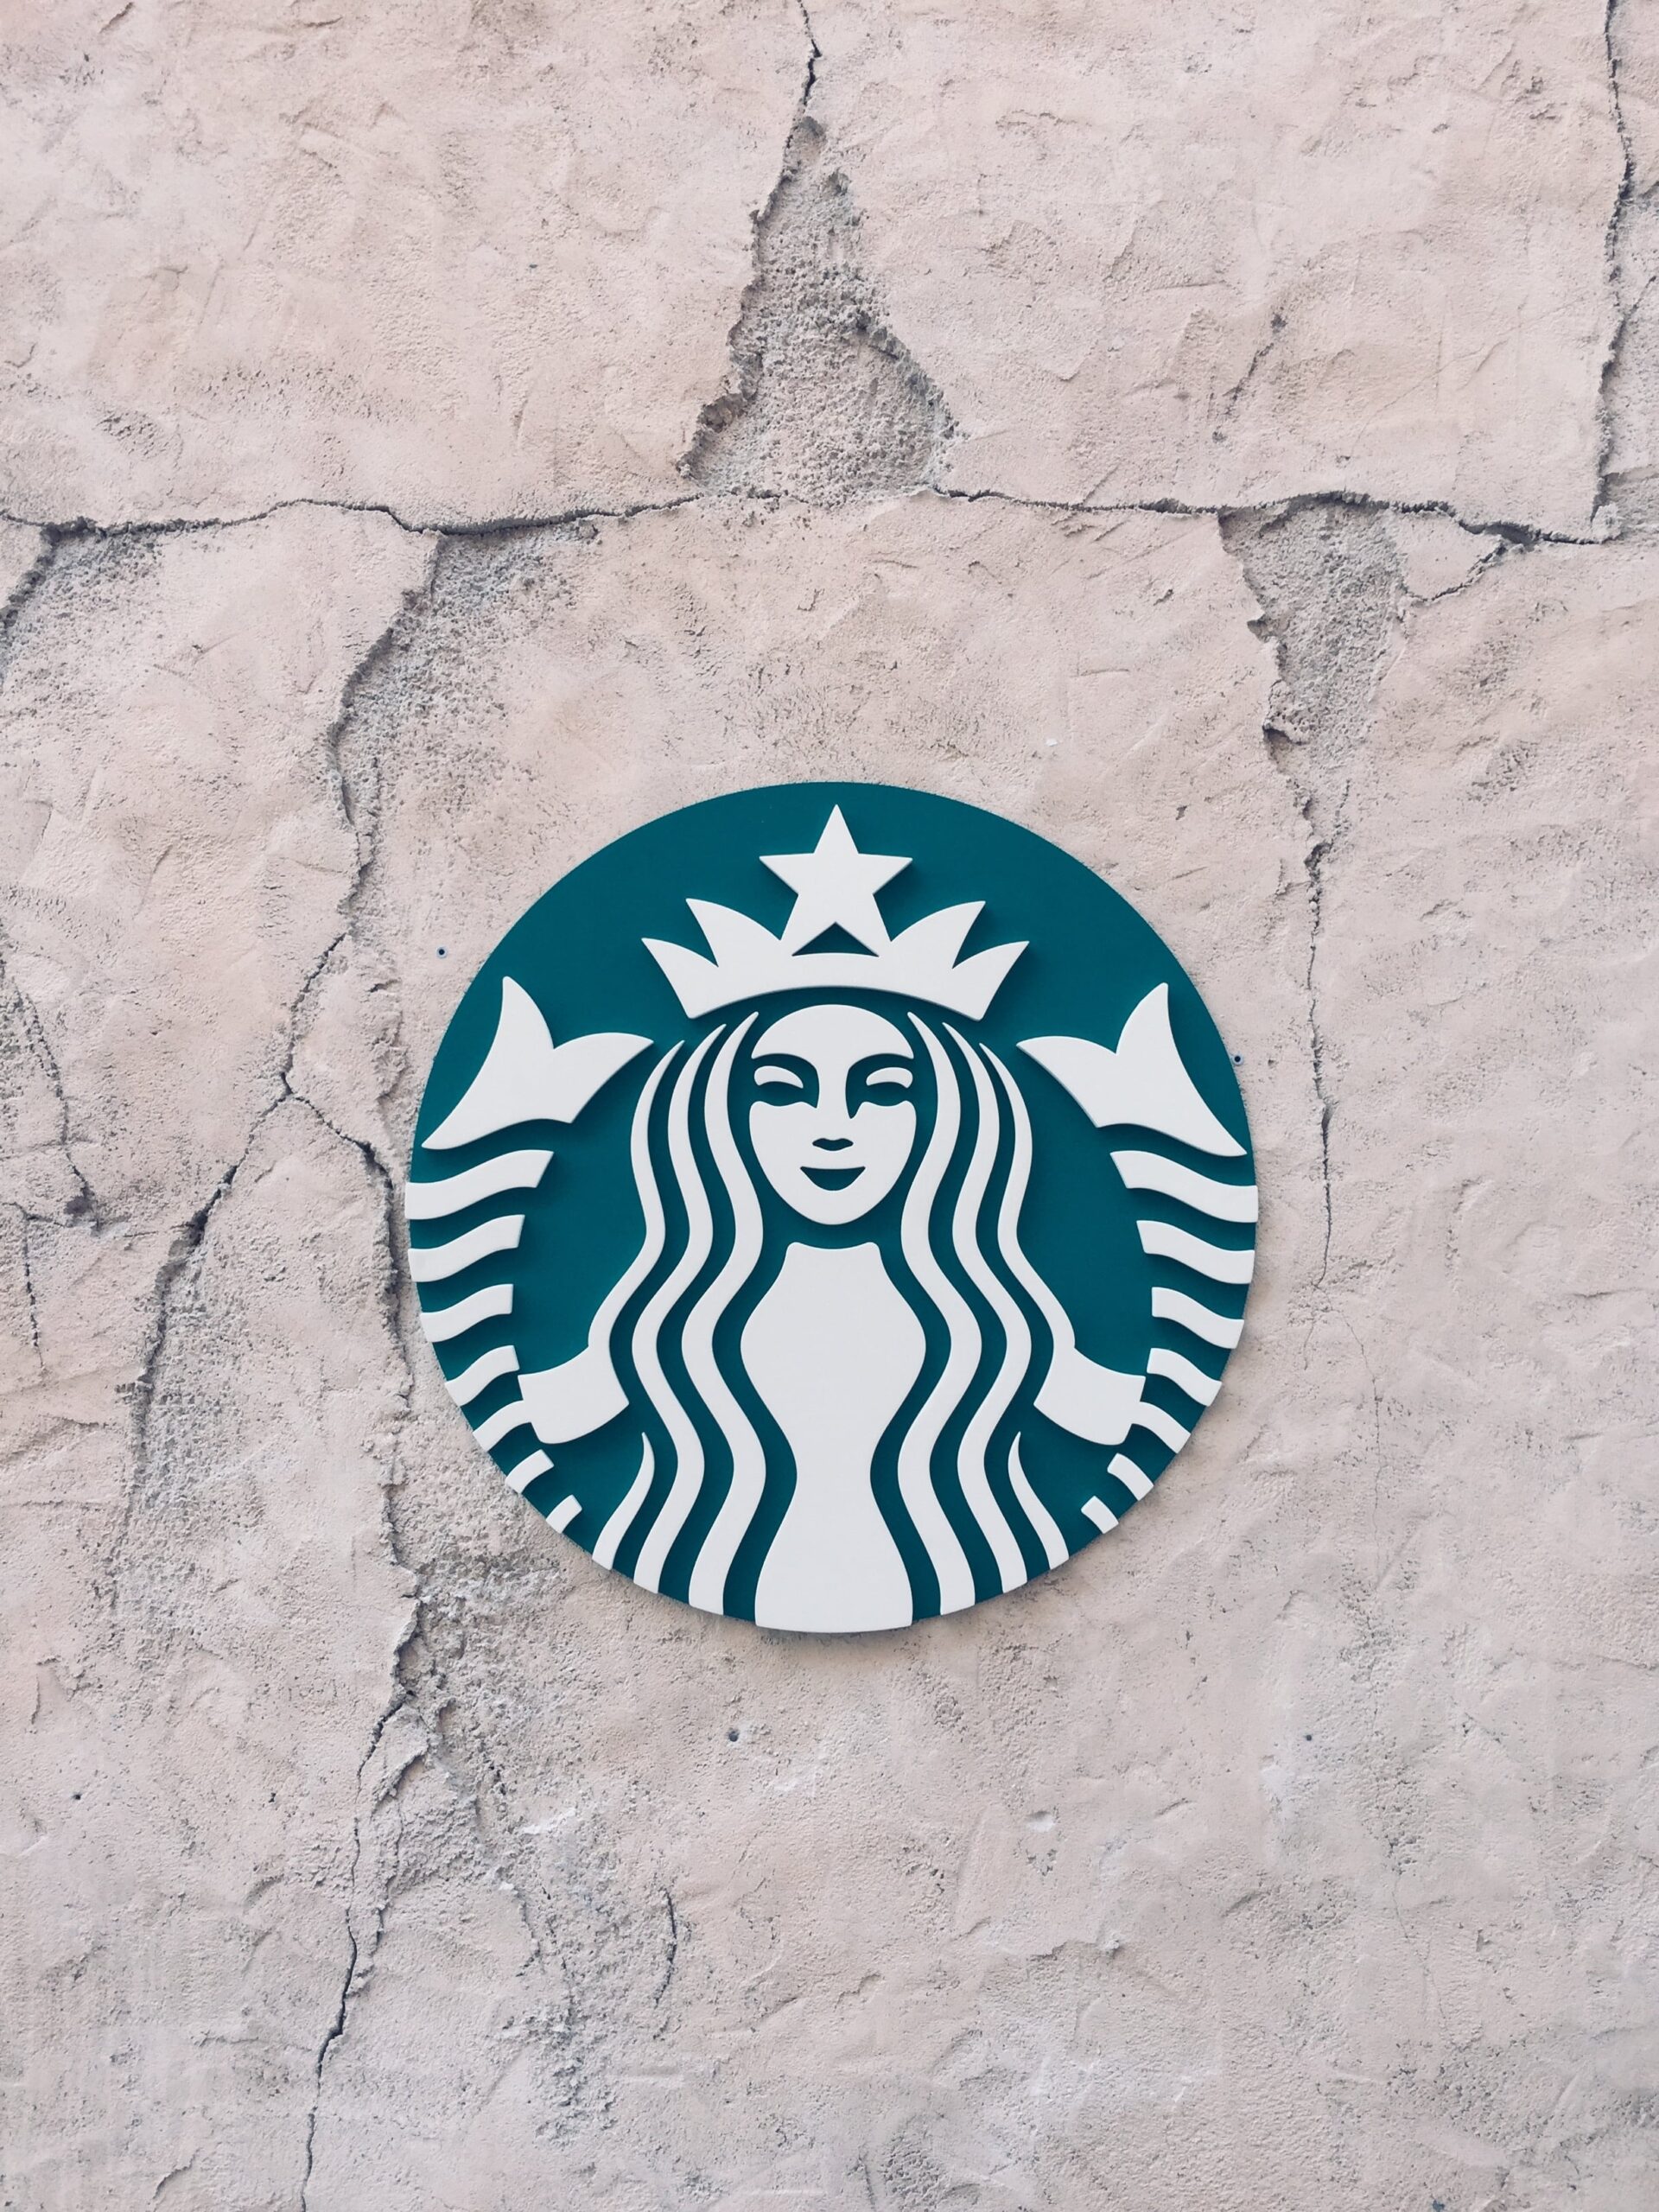 Starbucks brand identity